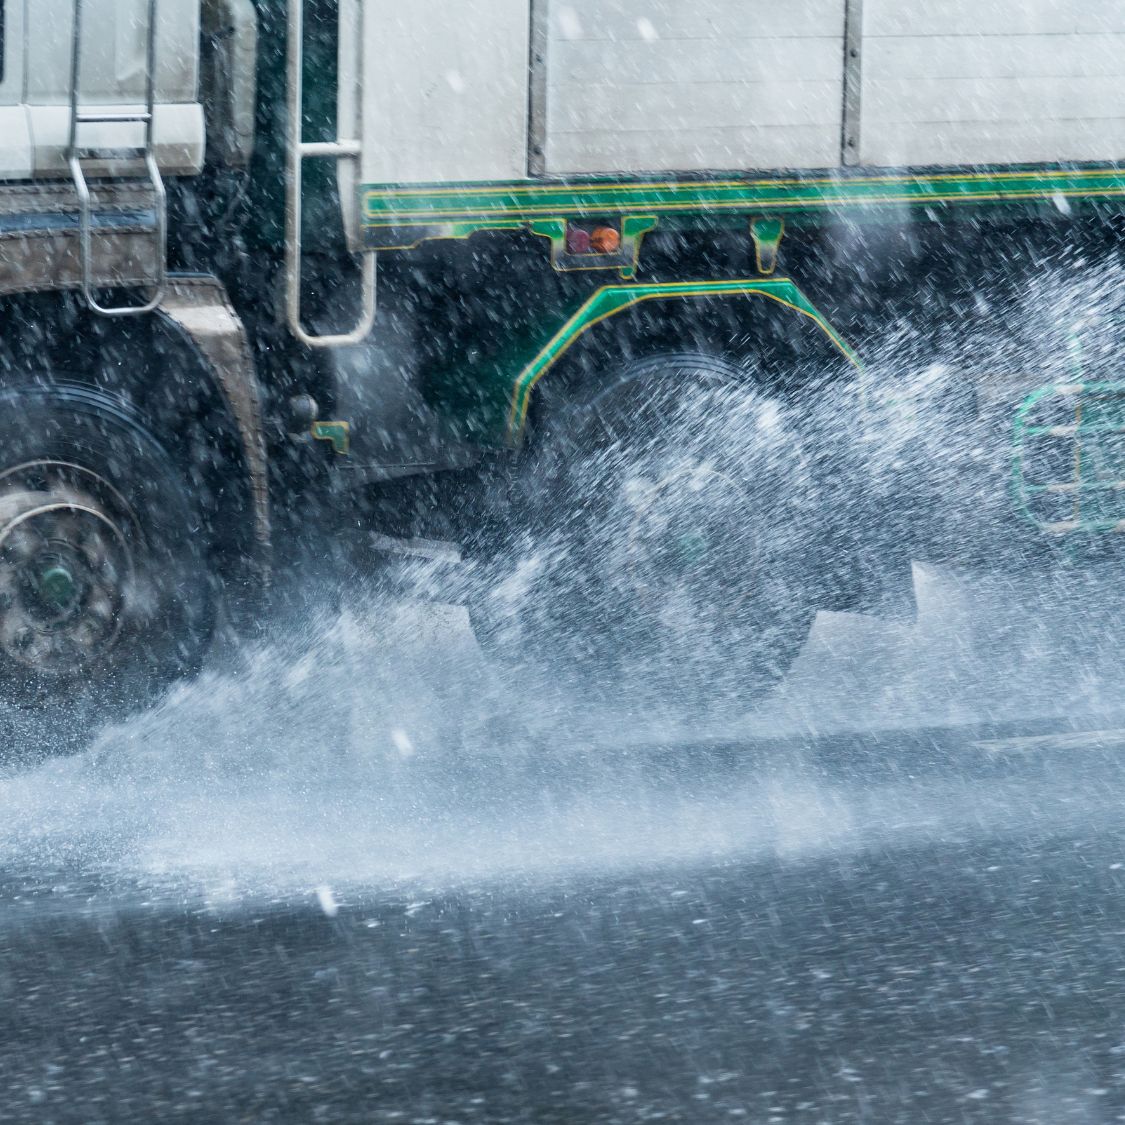 Semi Safety: Tips for Trucking Through Heavy Rain